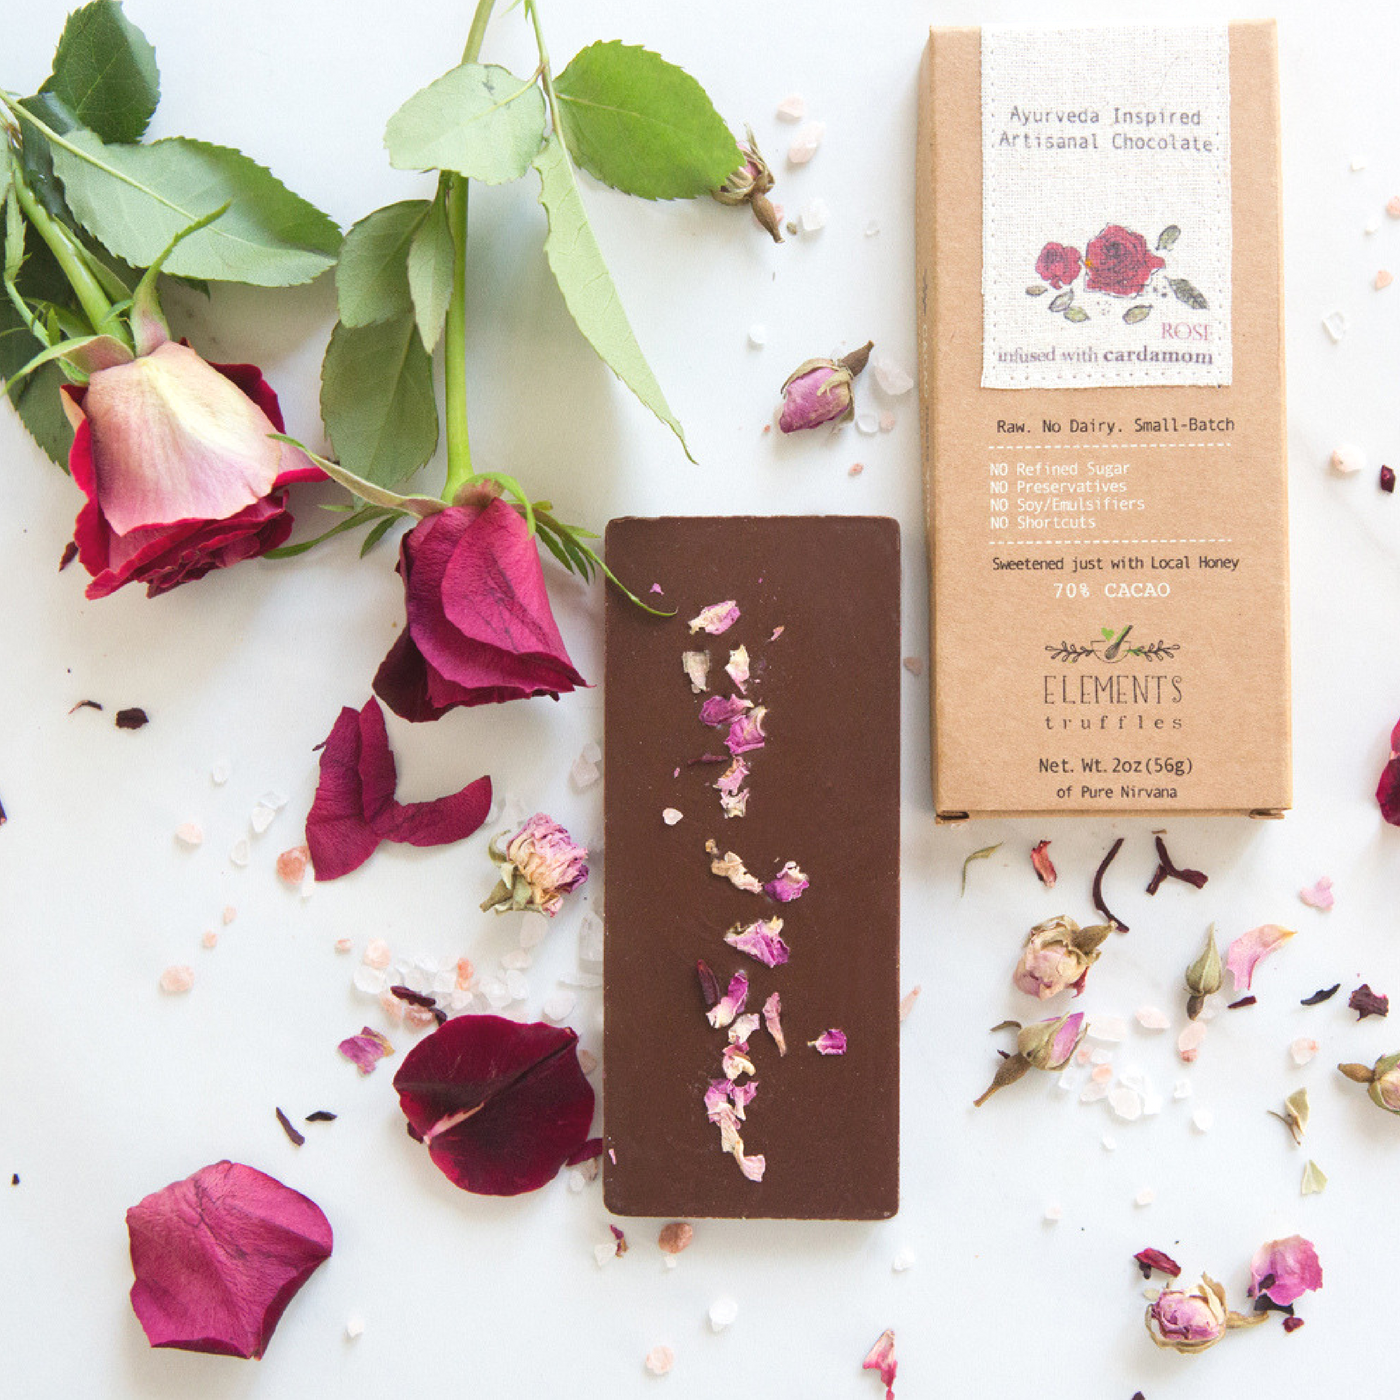 Rose with Cardamom Chocolate Bar